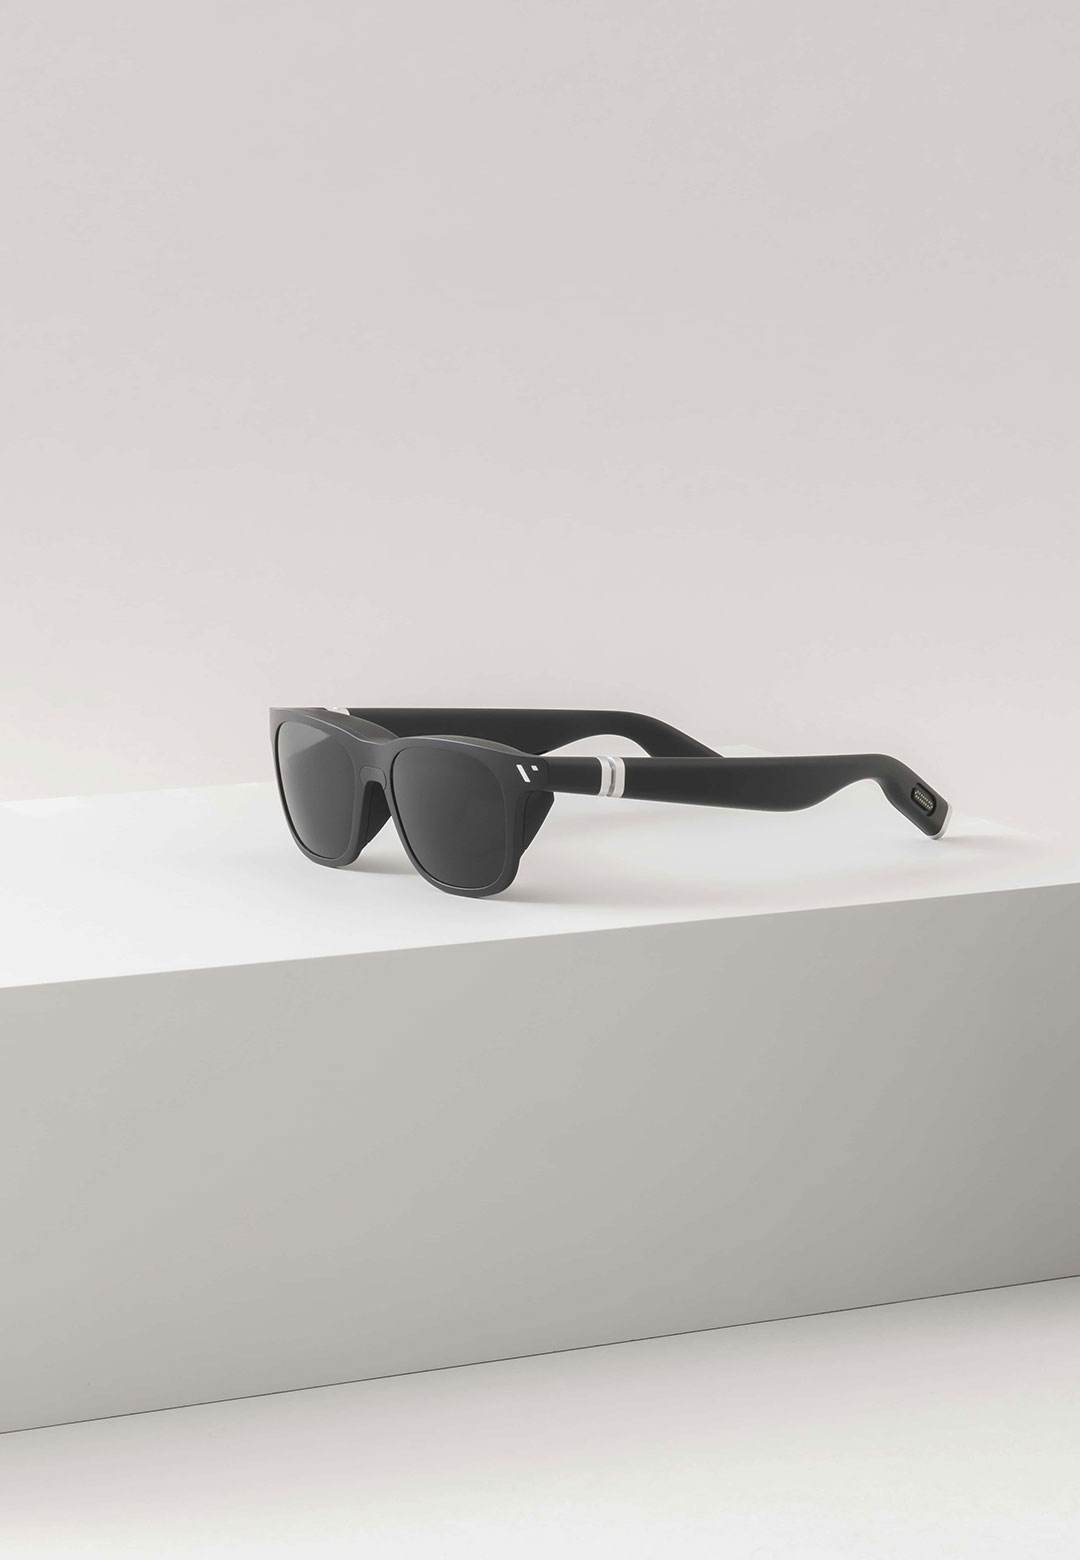 Layer Design x Viture’s ‘VITURE One’ is a revolution in VR eyewear